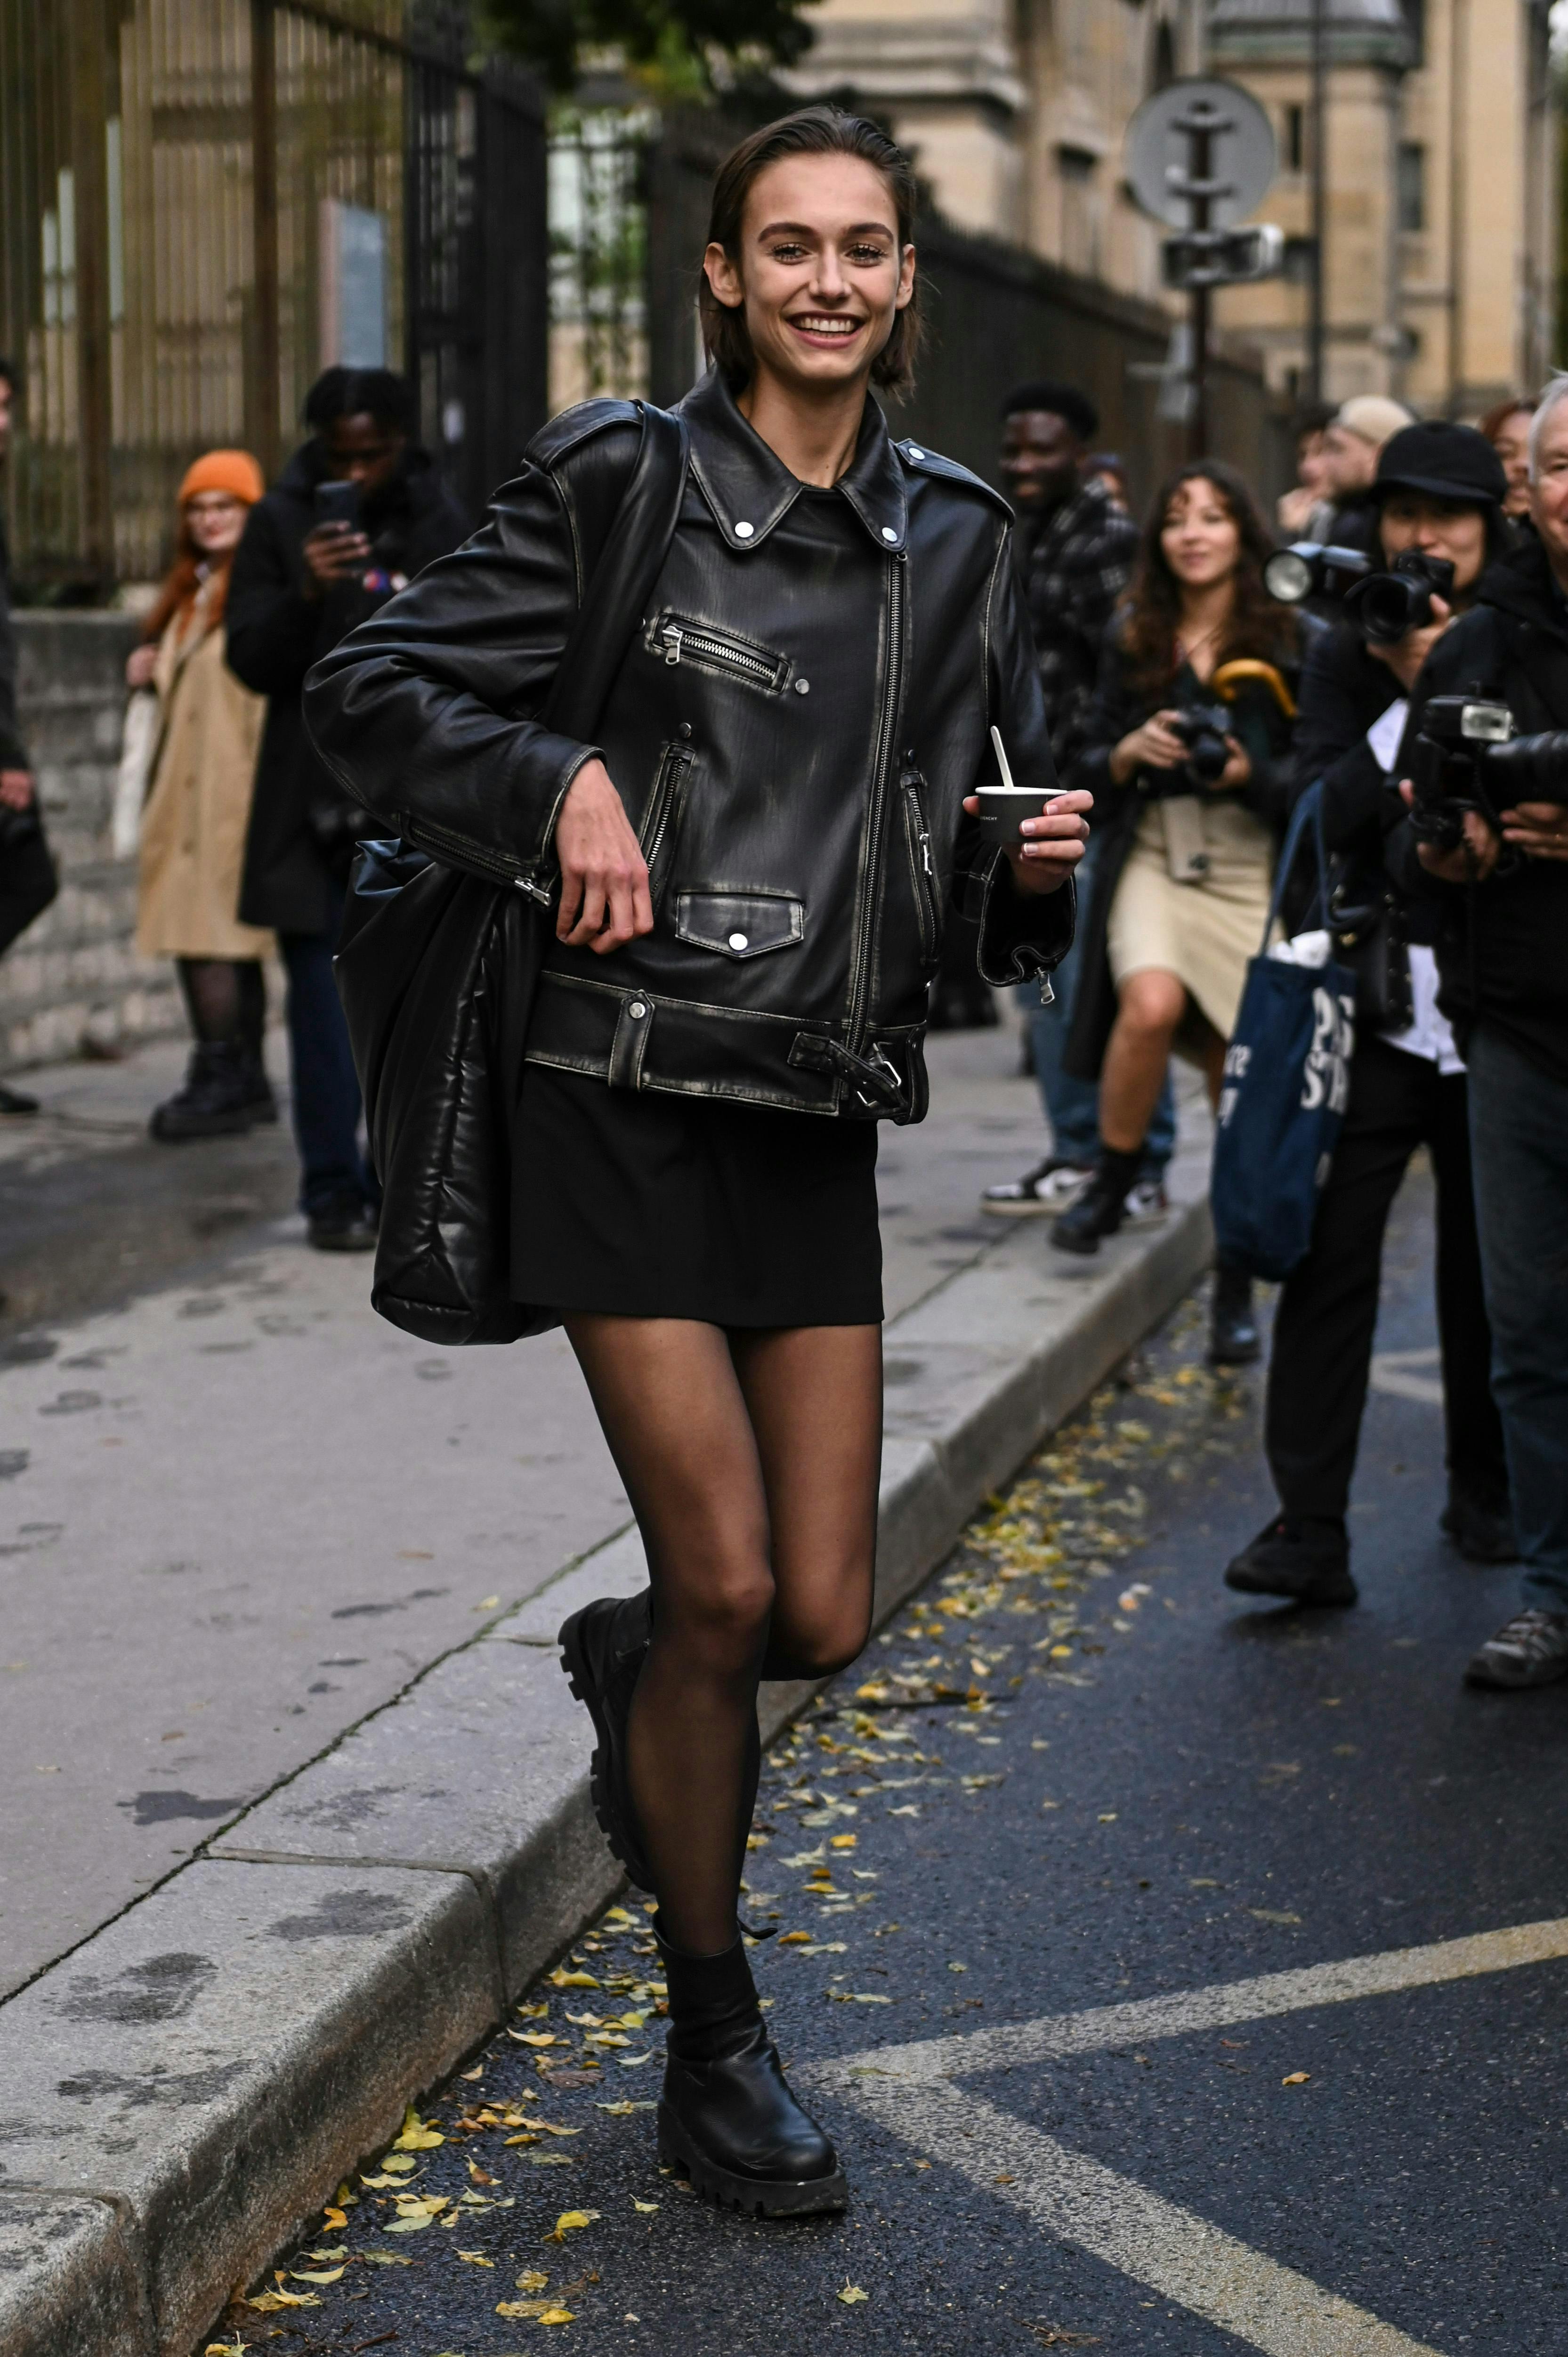 model on street wearing black miniskirt and leather jacket.